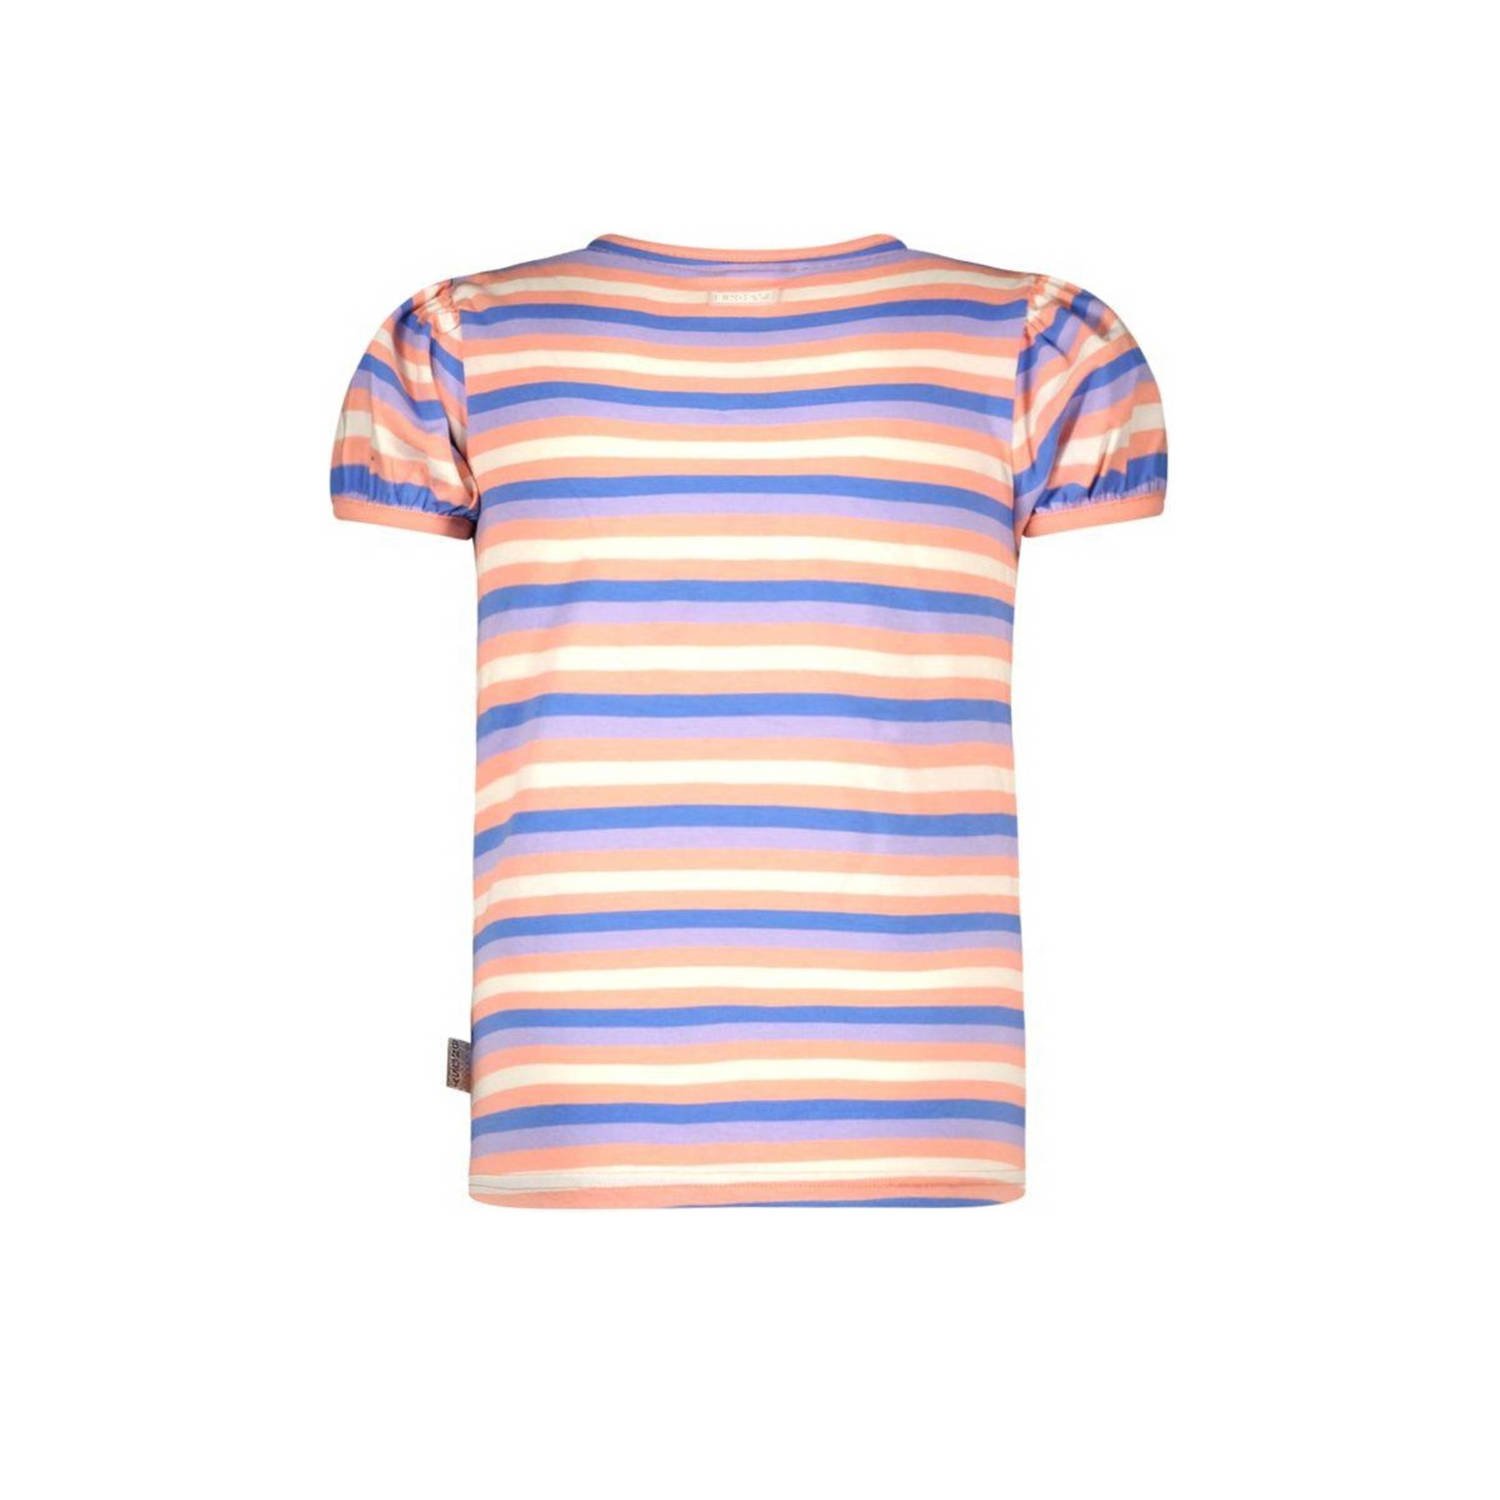 B.Nosy gestreept T-shirt Phebe roze blauw wit